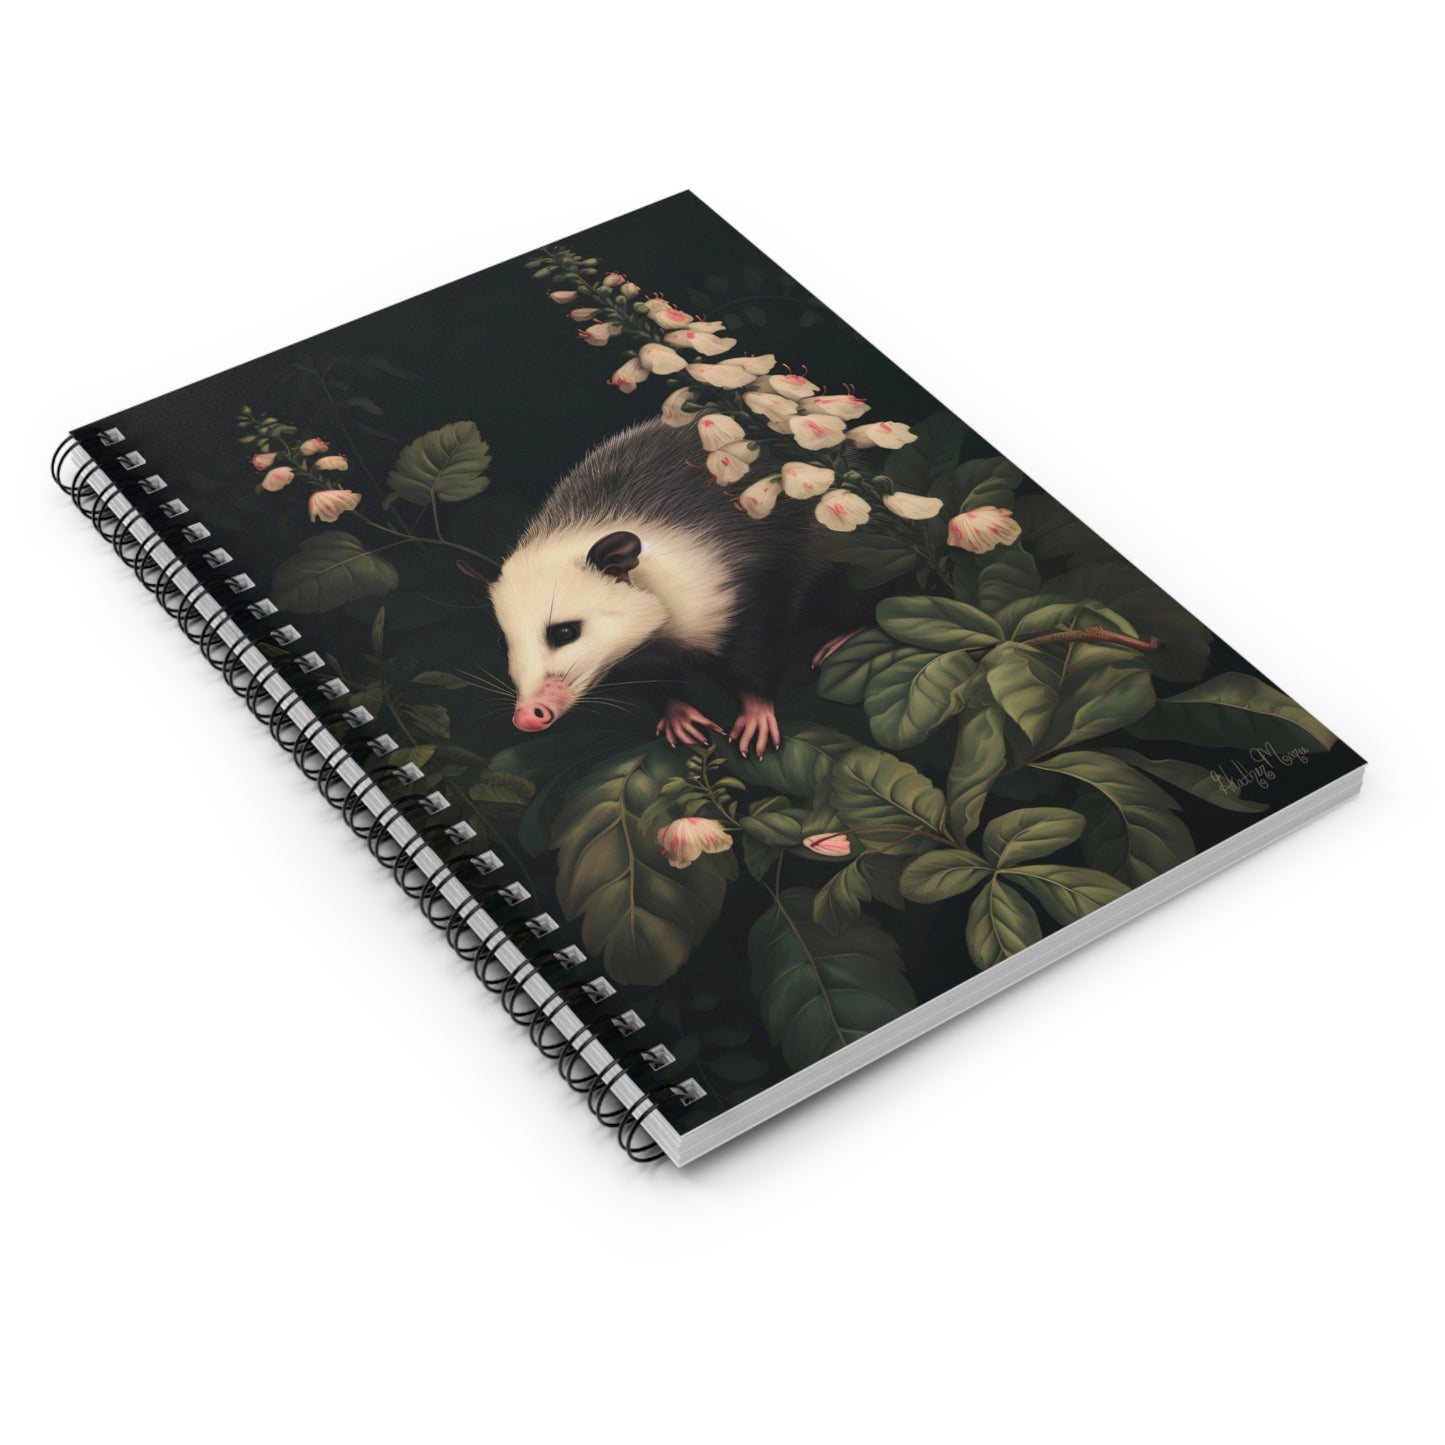 Opossum in Lush Foliage |  Ruled Line Spiral Notebook